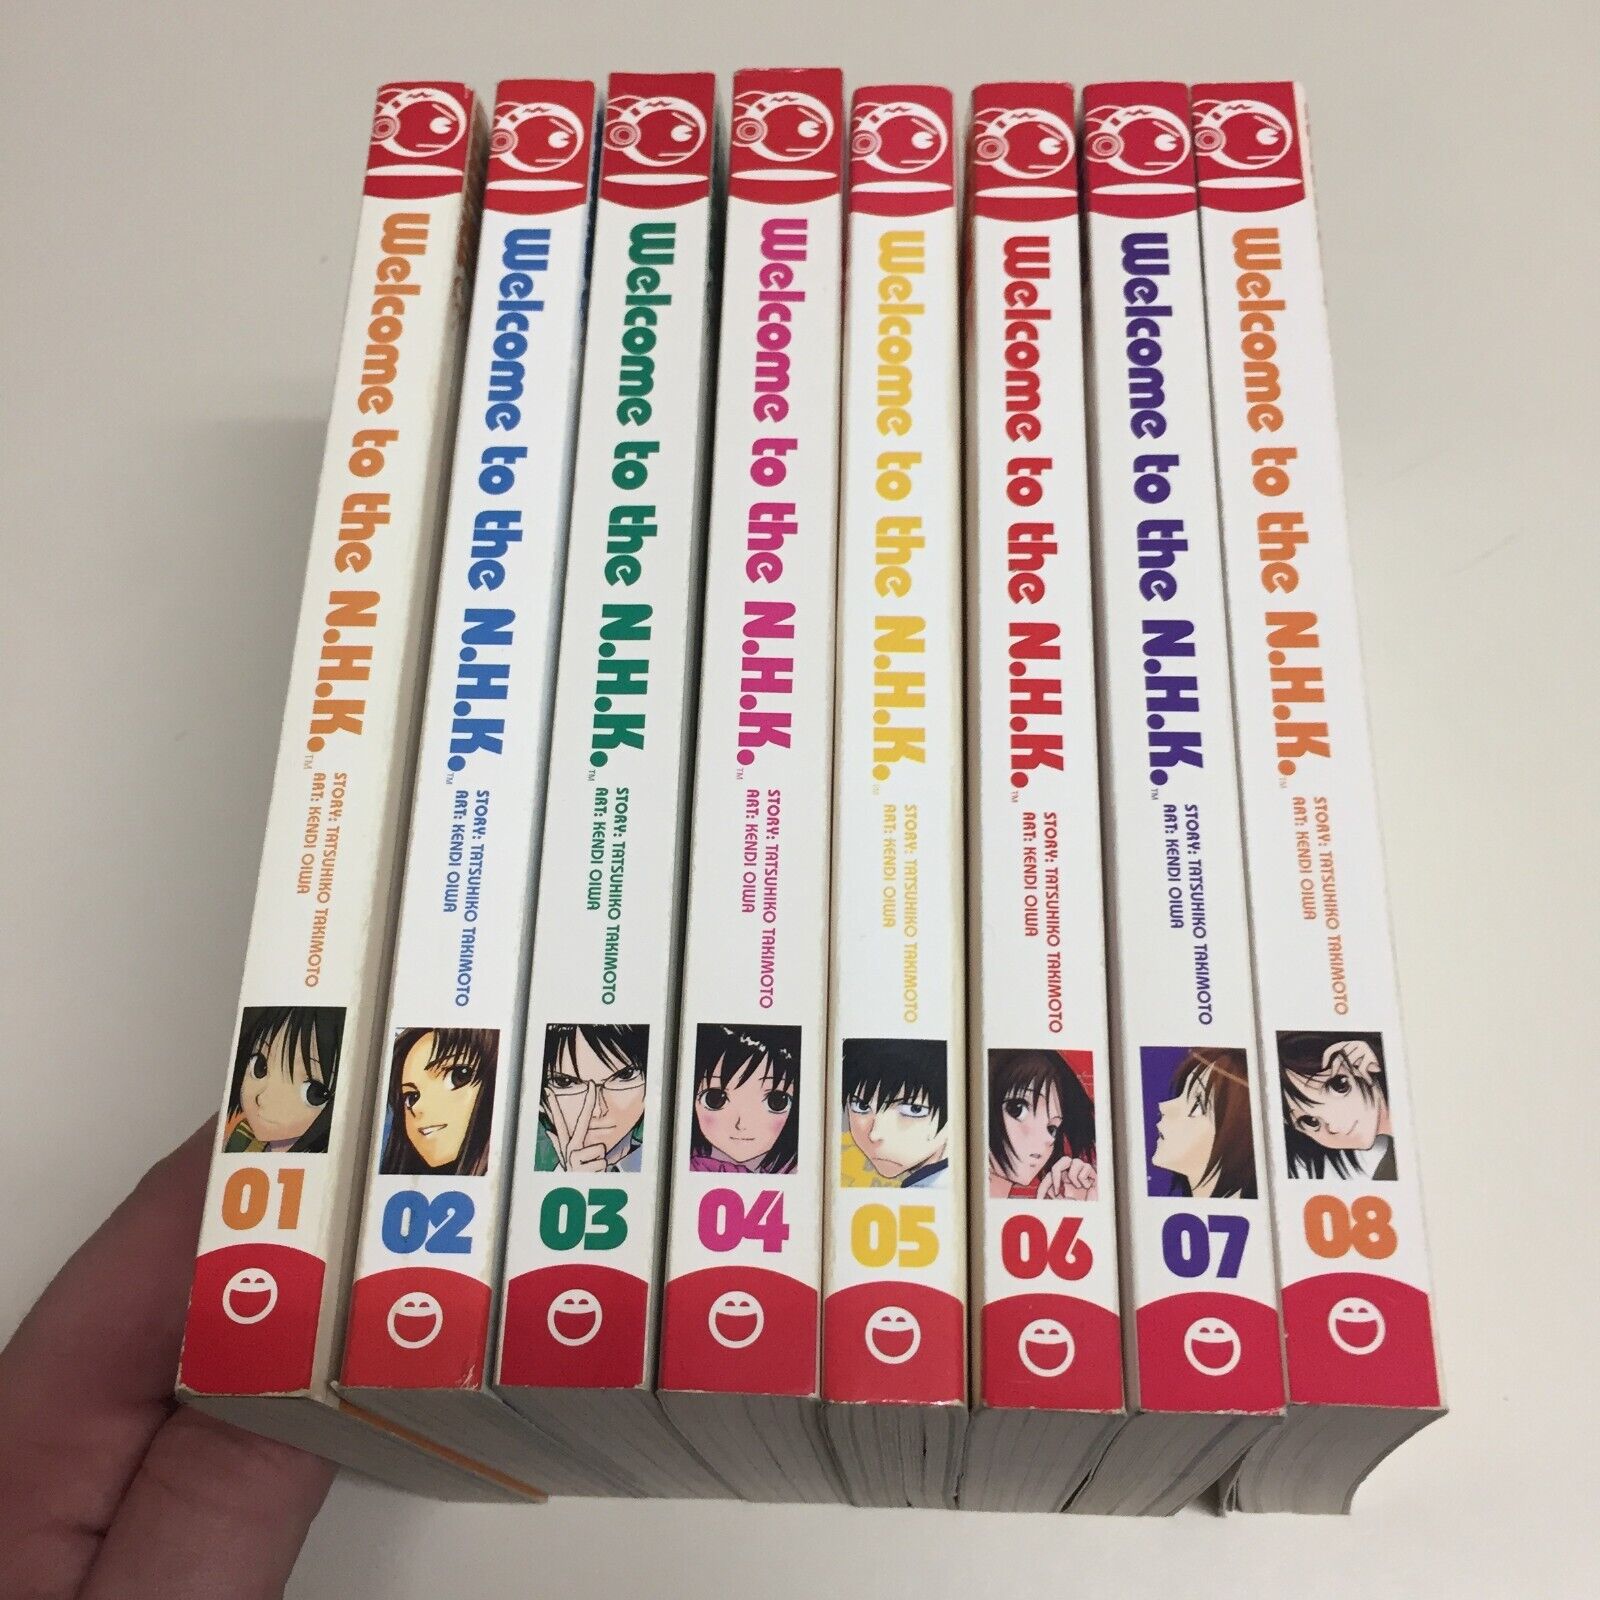 Welcome to the NHK N.H.K. Complete English Manga Set Series Volume 1-8 Vol